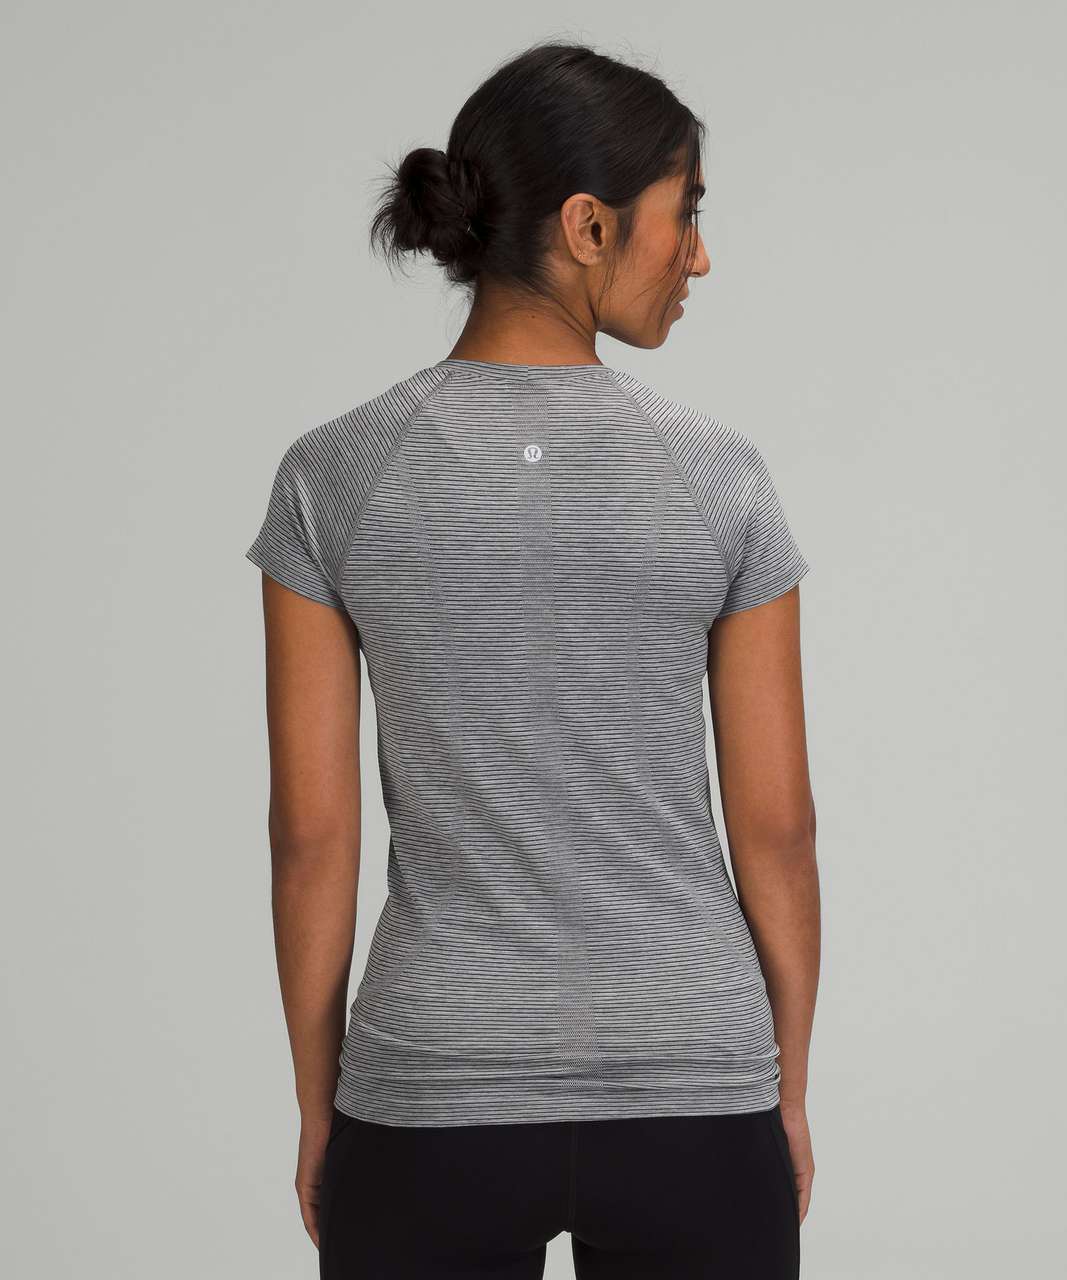 Lululemon Swiftly Tech Short Sleeve Shirt 2.0 - Tetra Stripe Asphalt Grey / Black / Alpine White / Rhino Grey